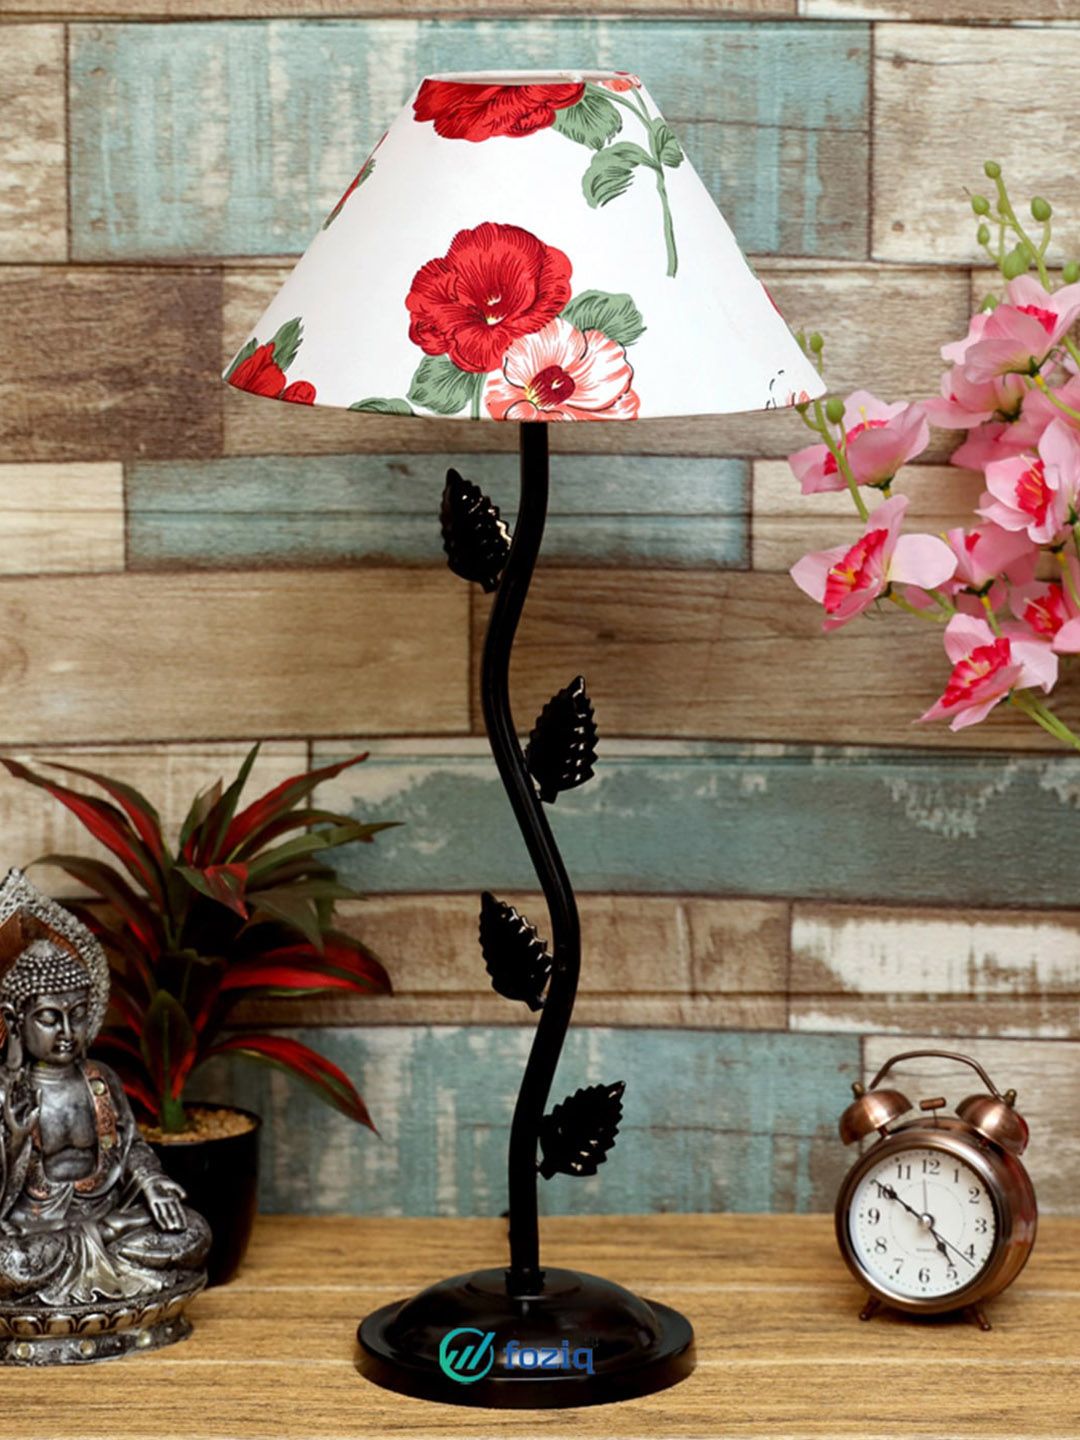 foziq Black & White Floral Printed Table Lamps Price in India